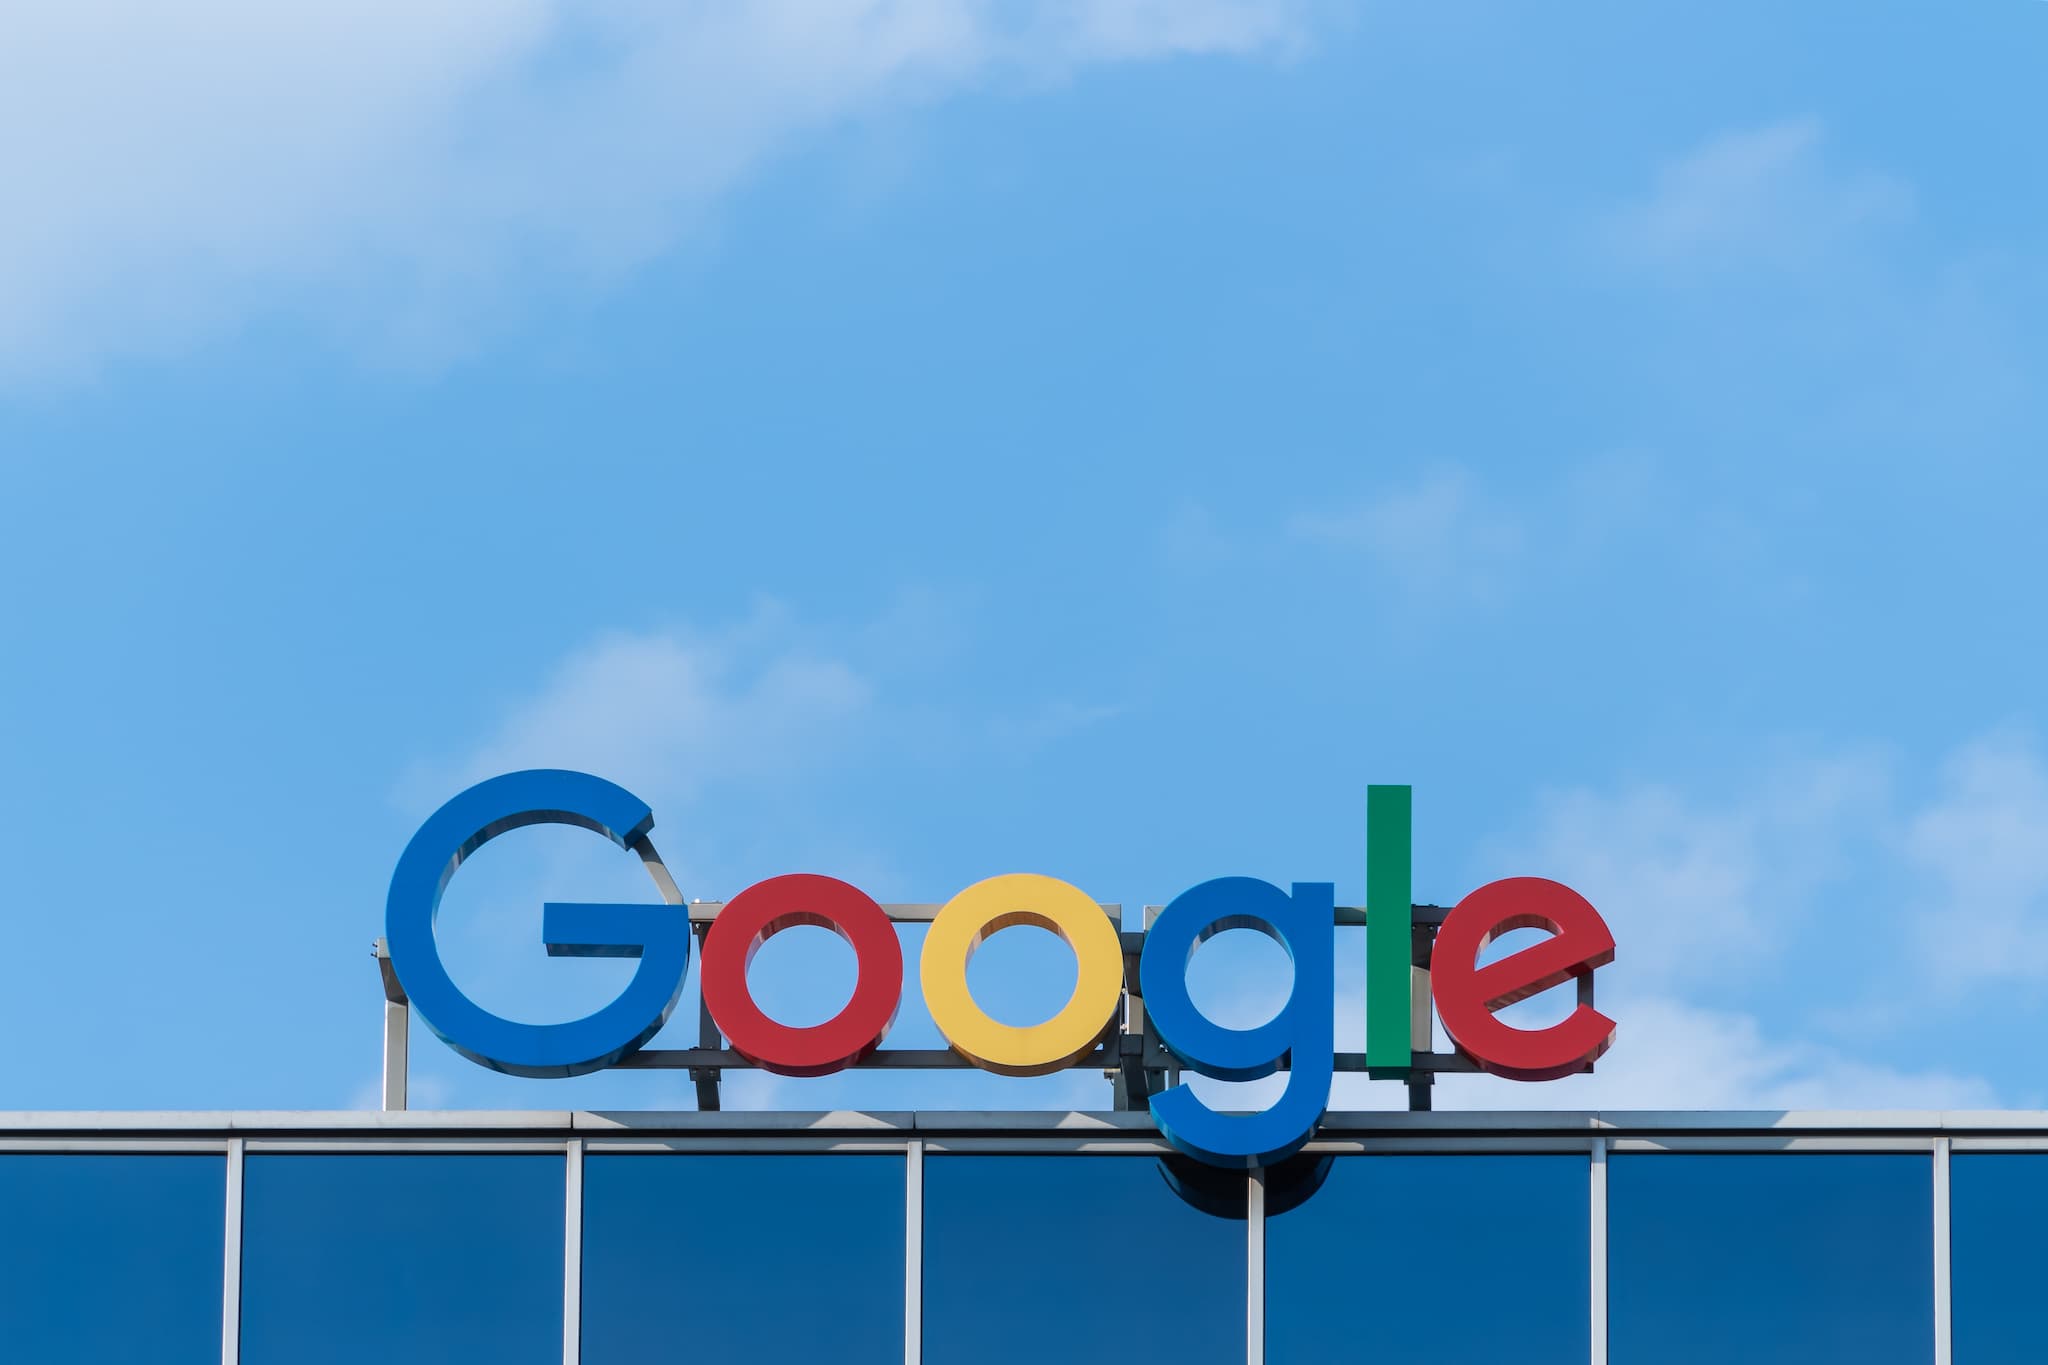 Google logo on roof